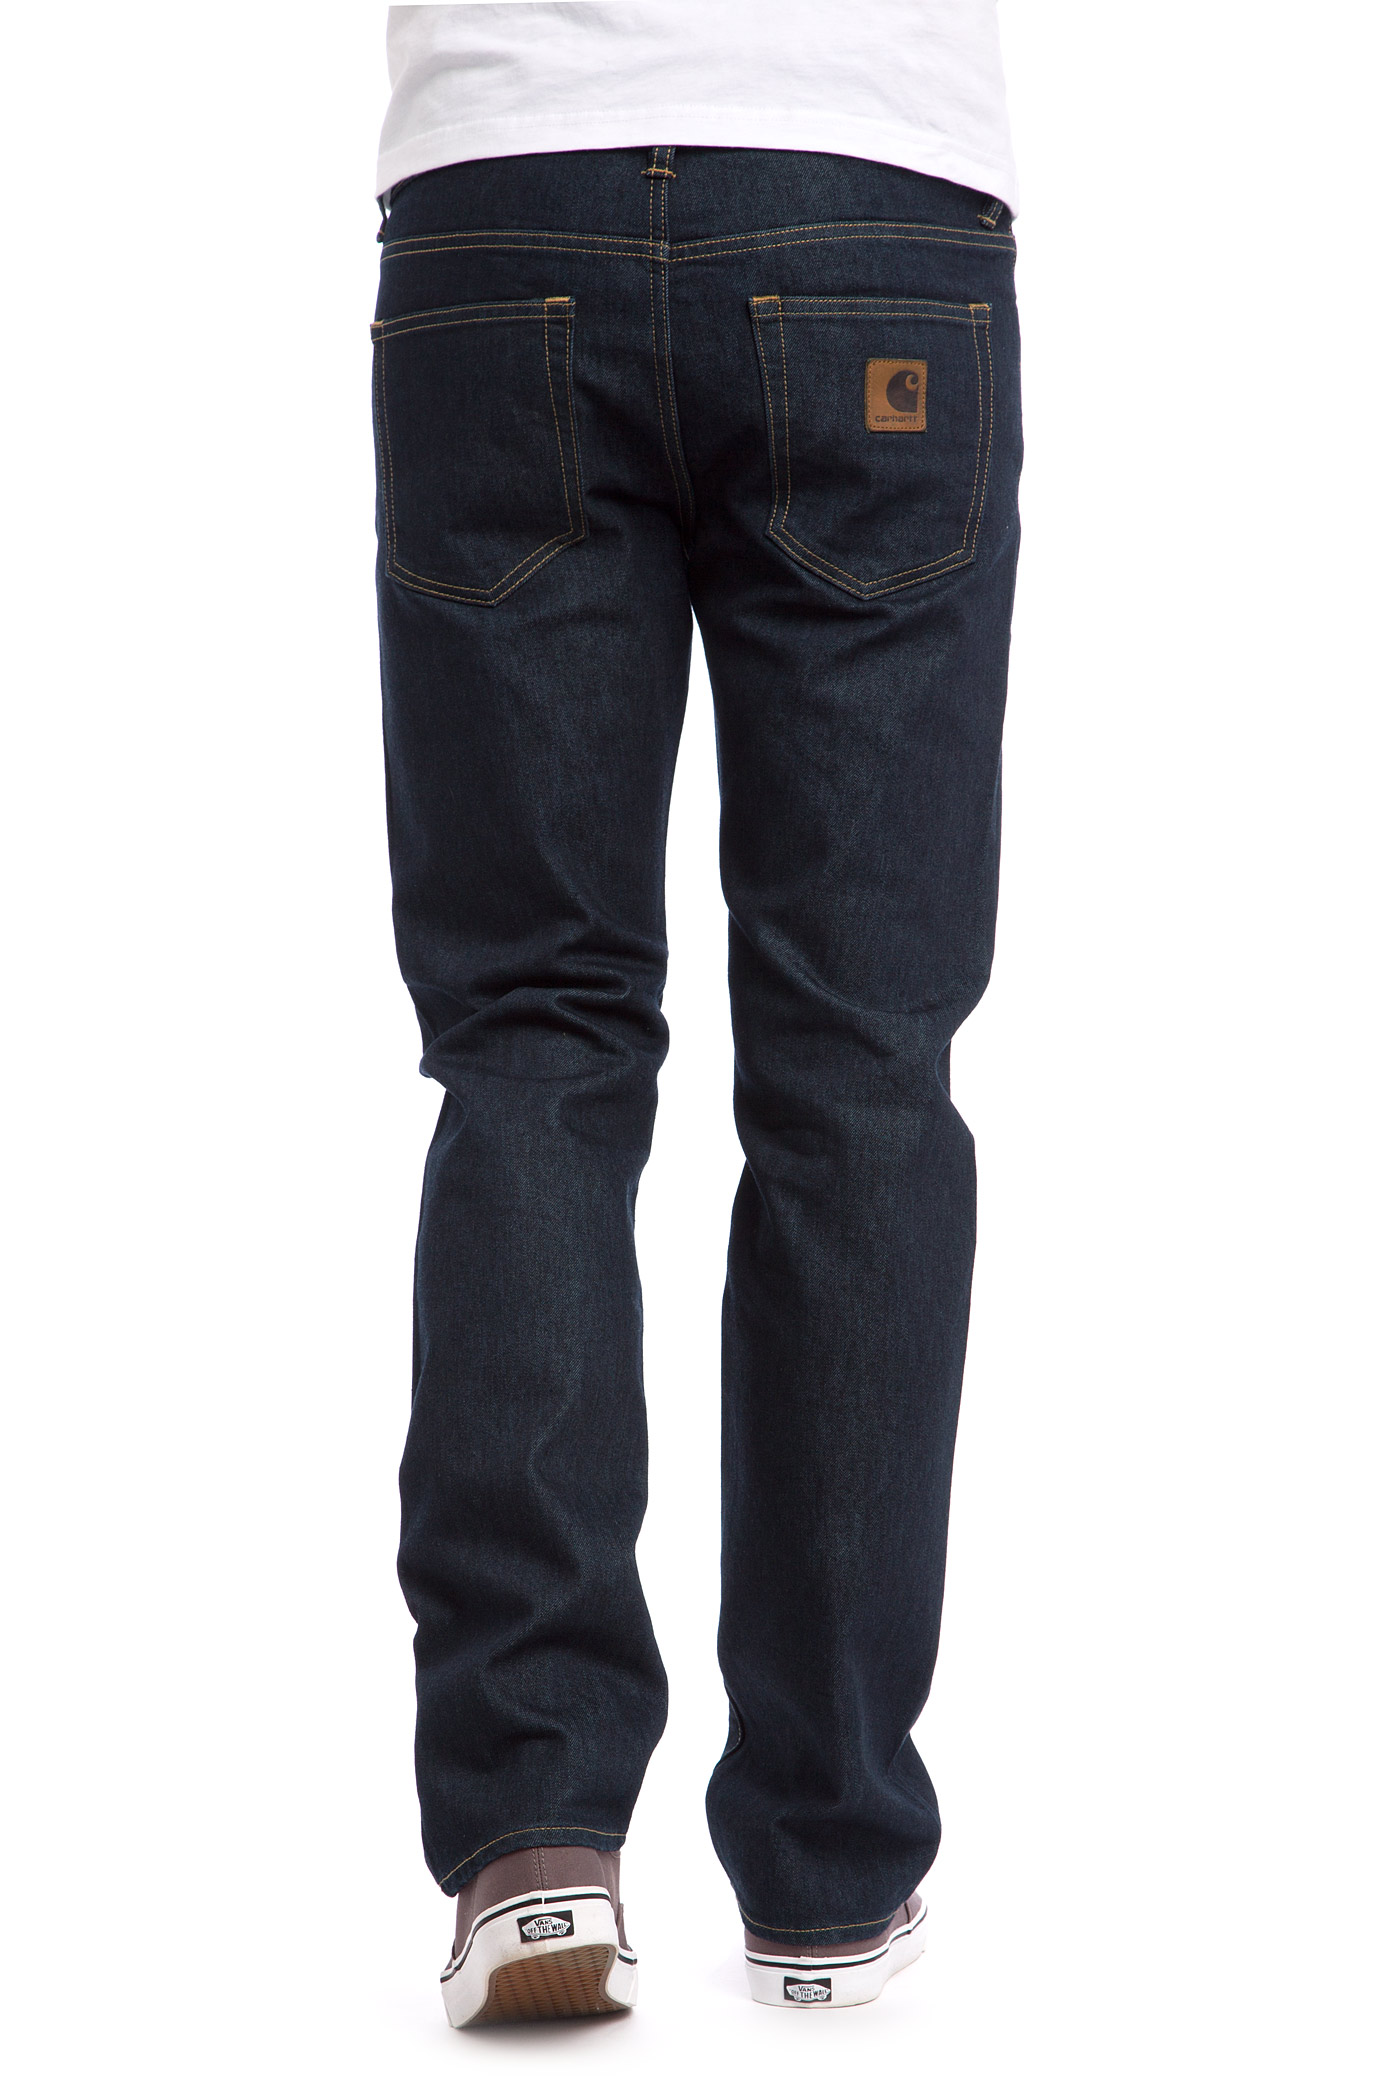 Carhartt WIP Rodney Pant Coronado Jeans (blue rinsed) buy at skatedeluxe